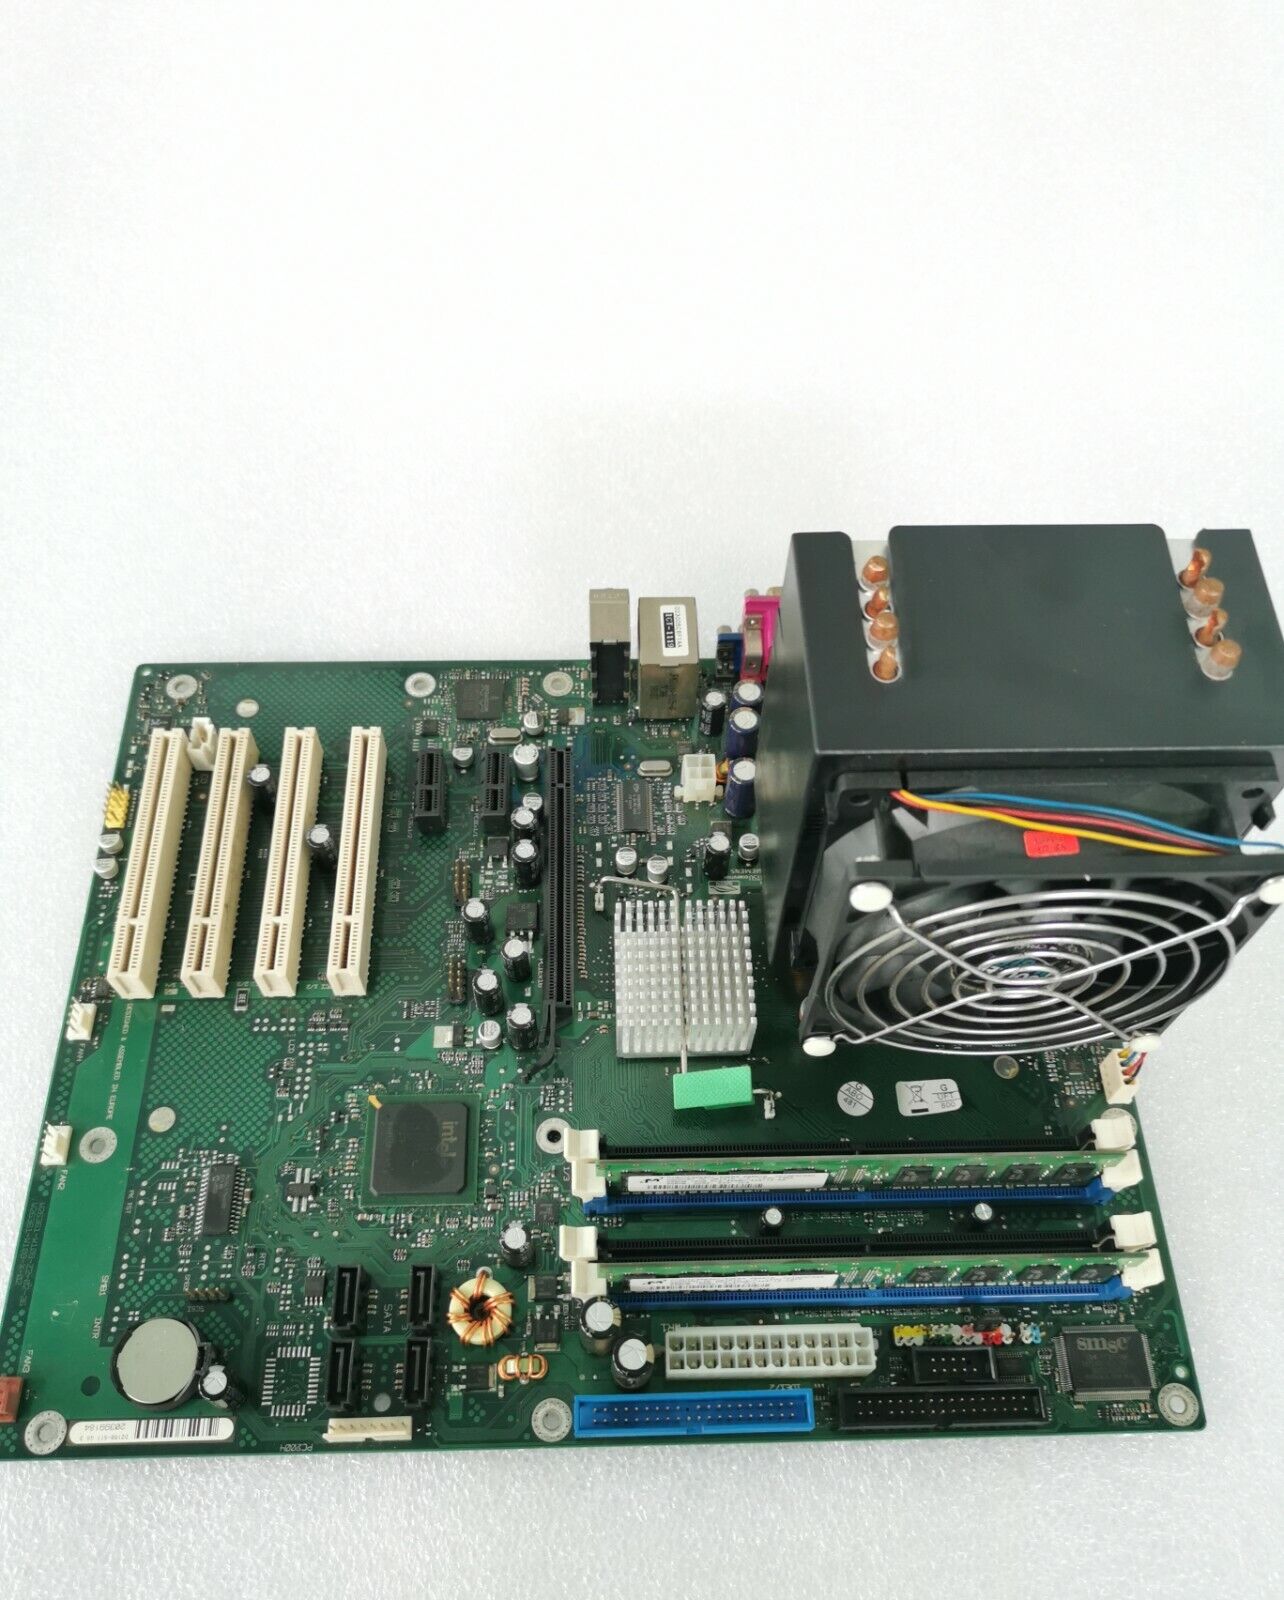 Fujitsu Siemens motherboard D2156-S11 GS3, W26361-W108-Z1-02-36, WORKING